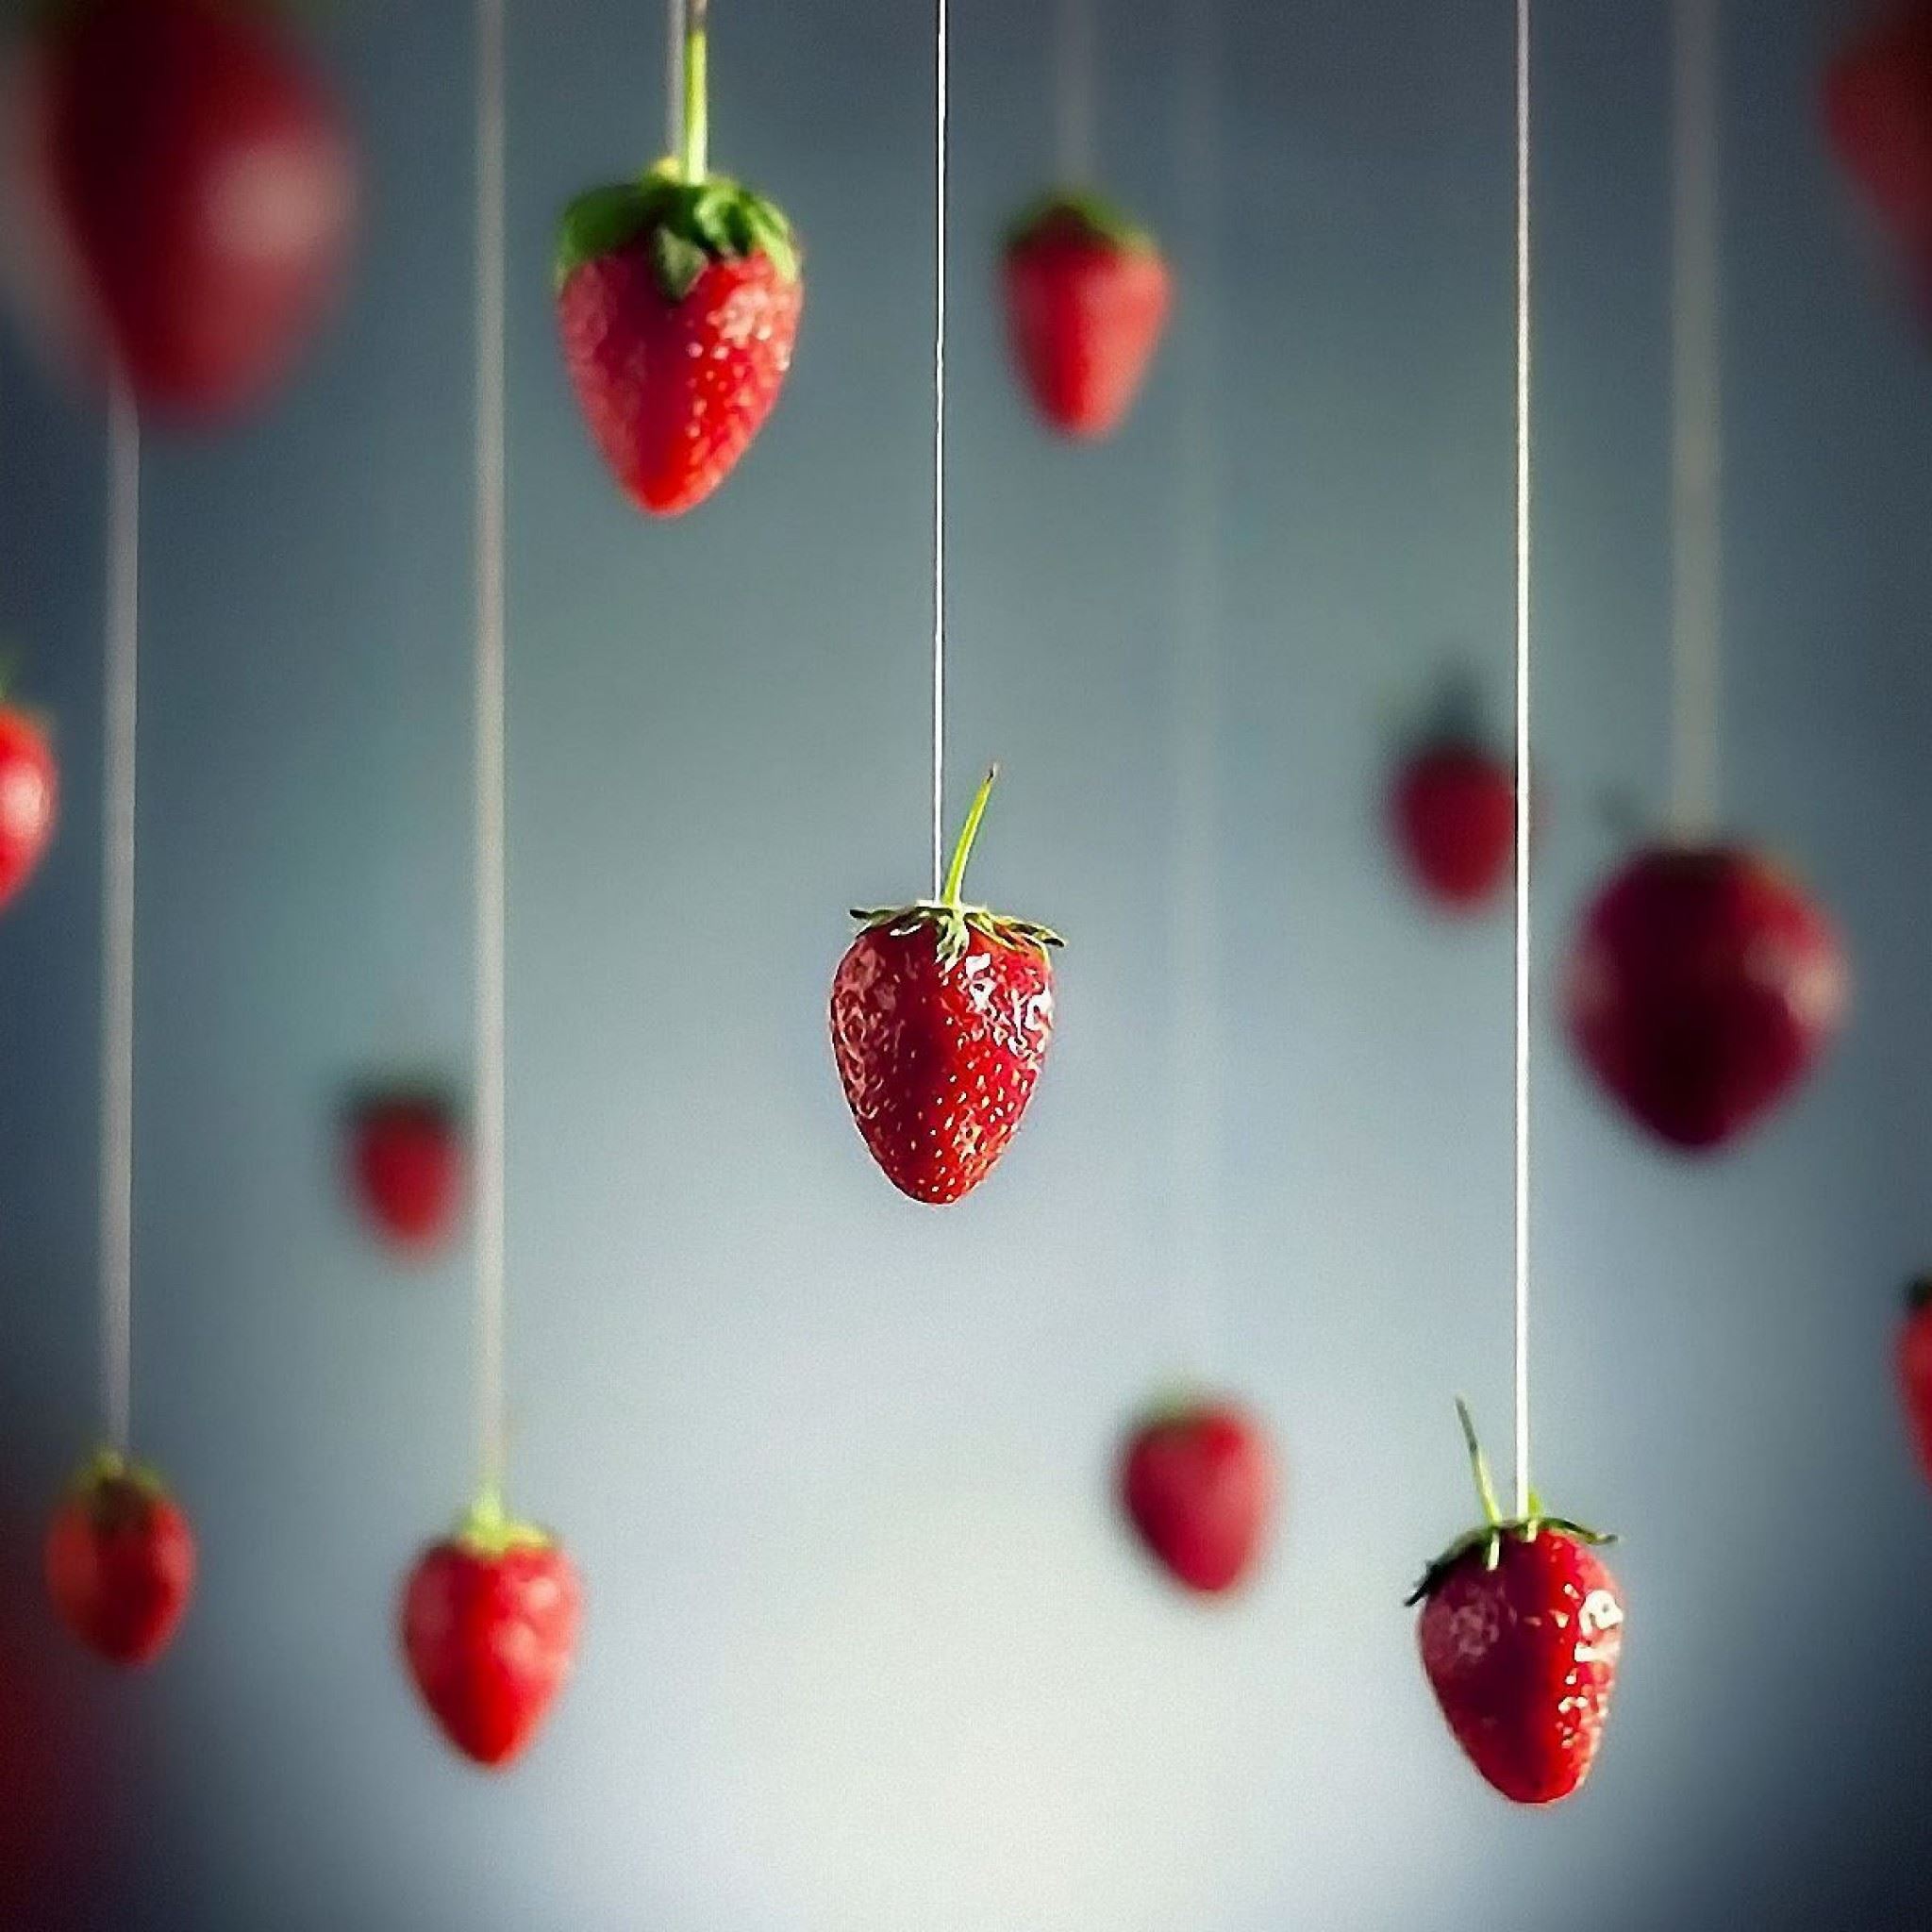 Strawberries Art iPad Air wallpaper 